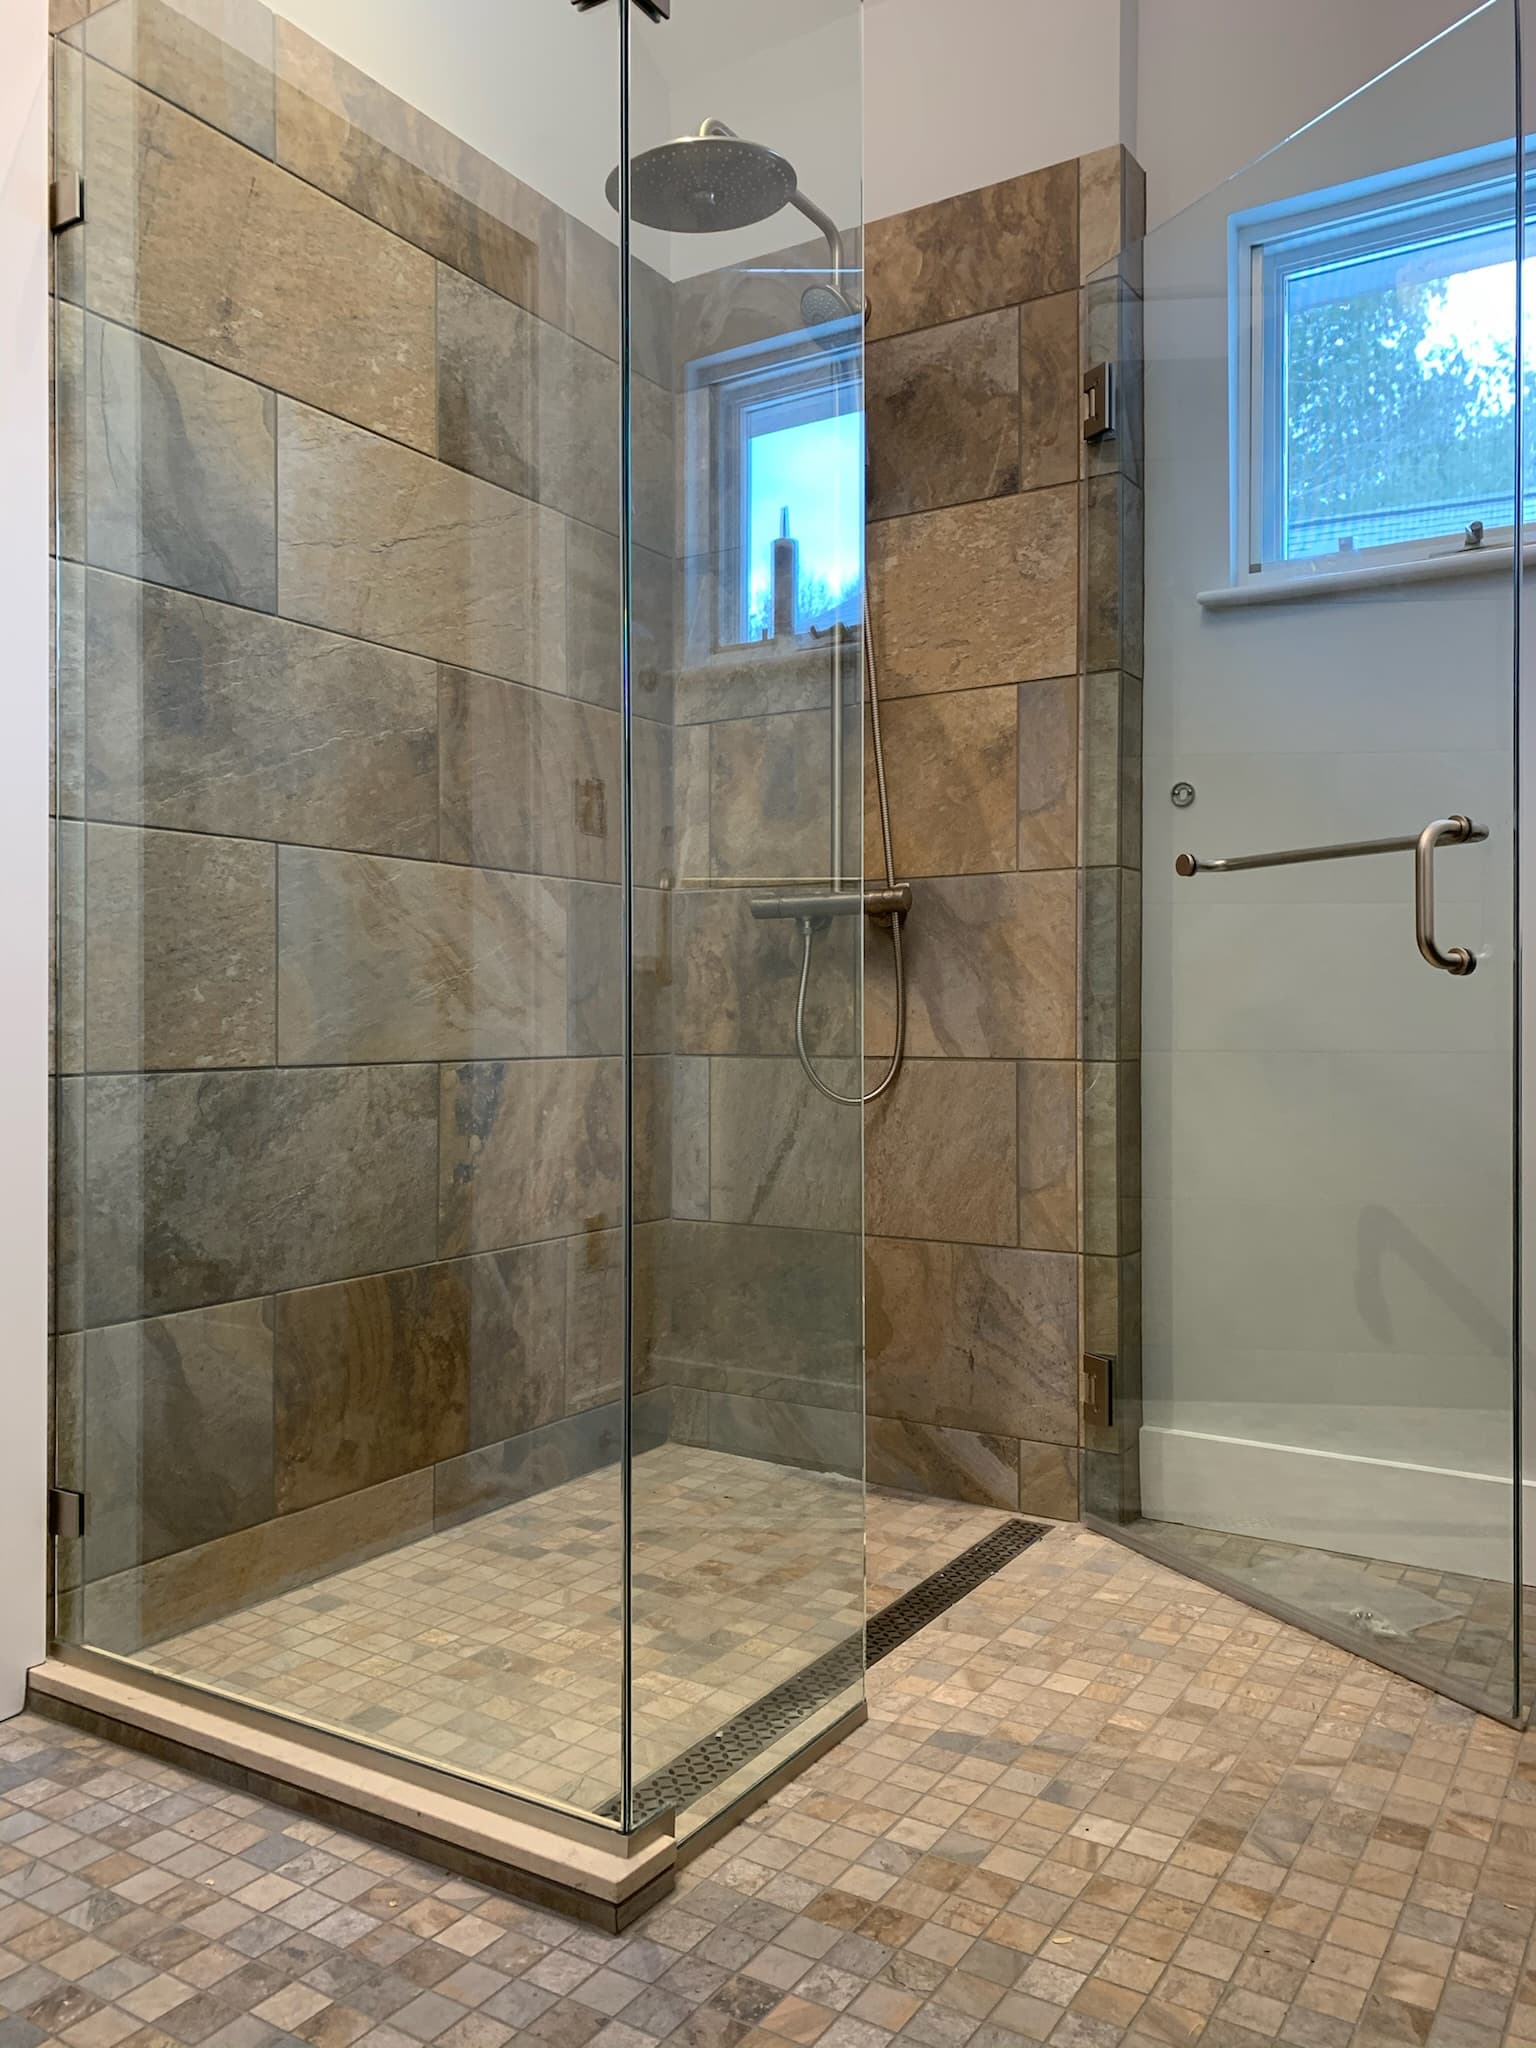 continuos bathroom tile floor into shower with glass door